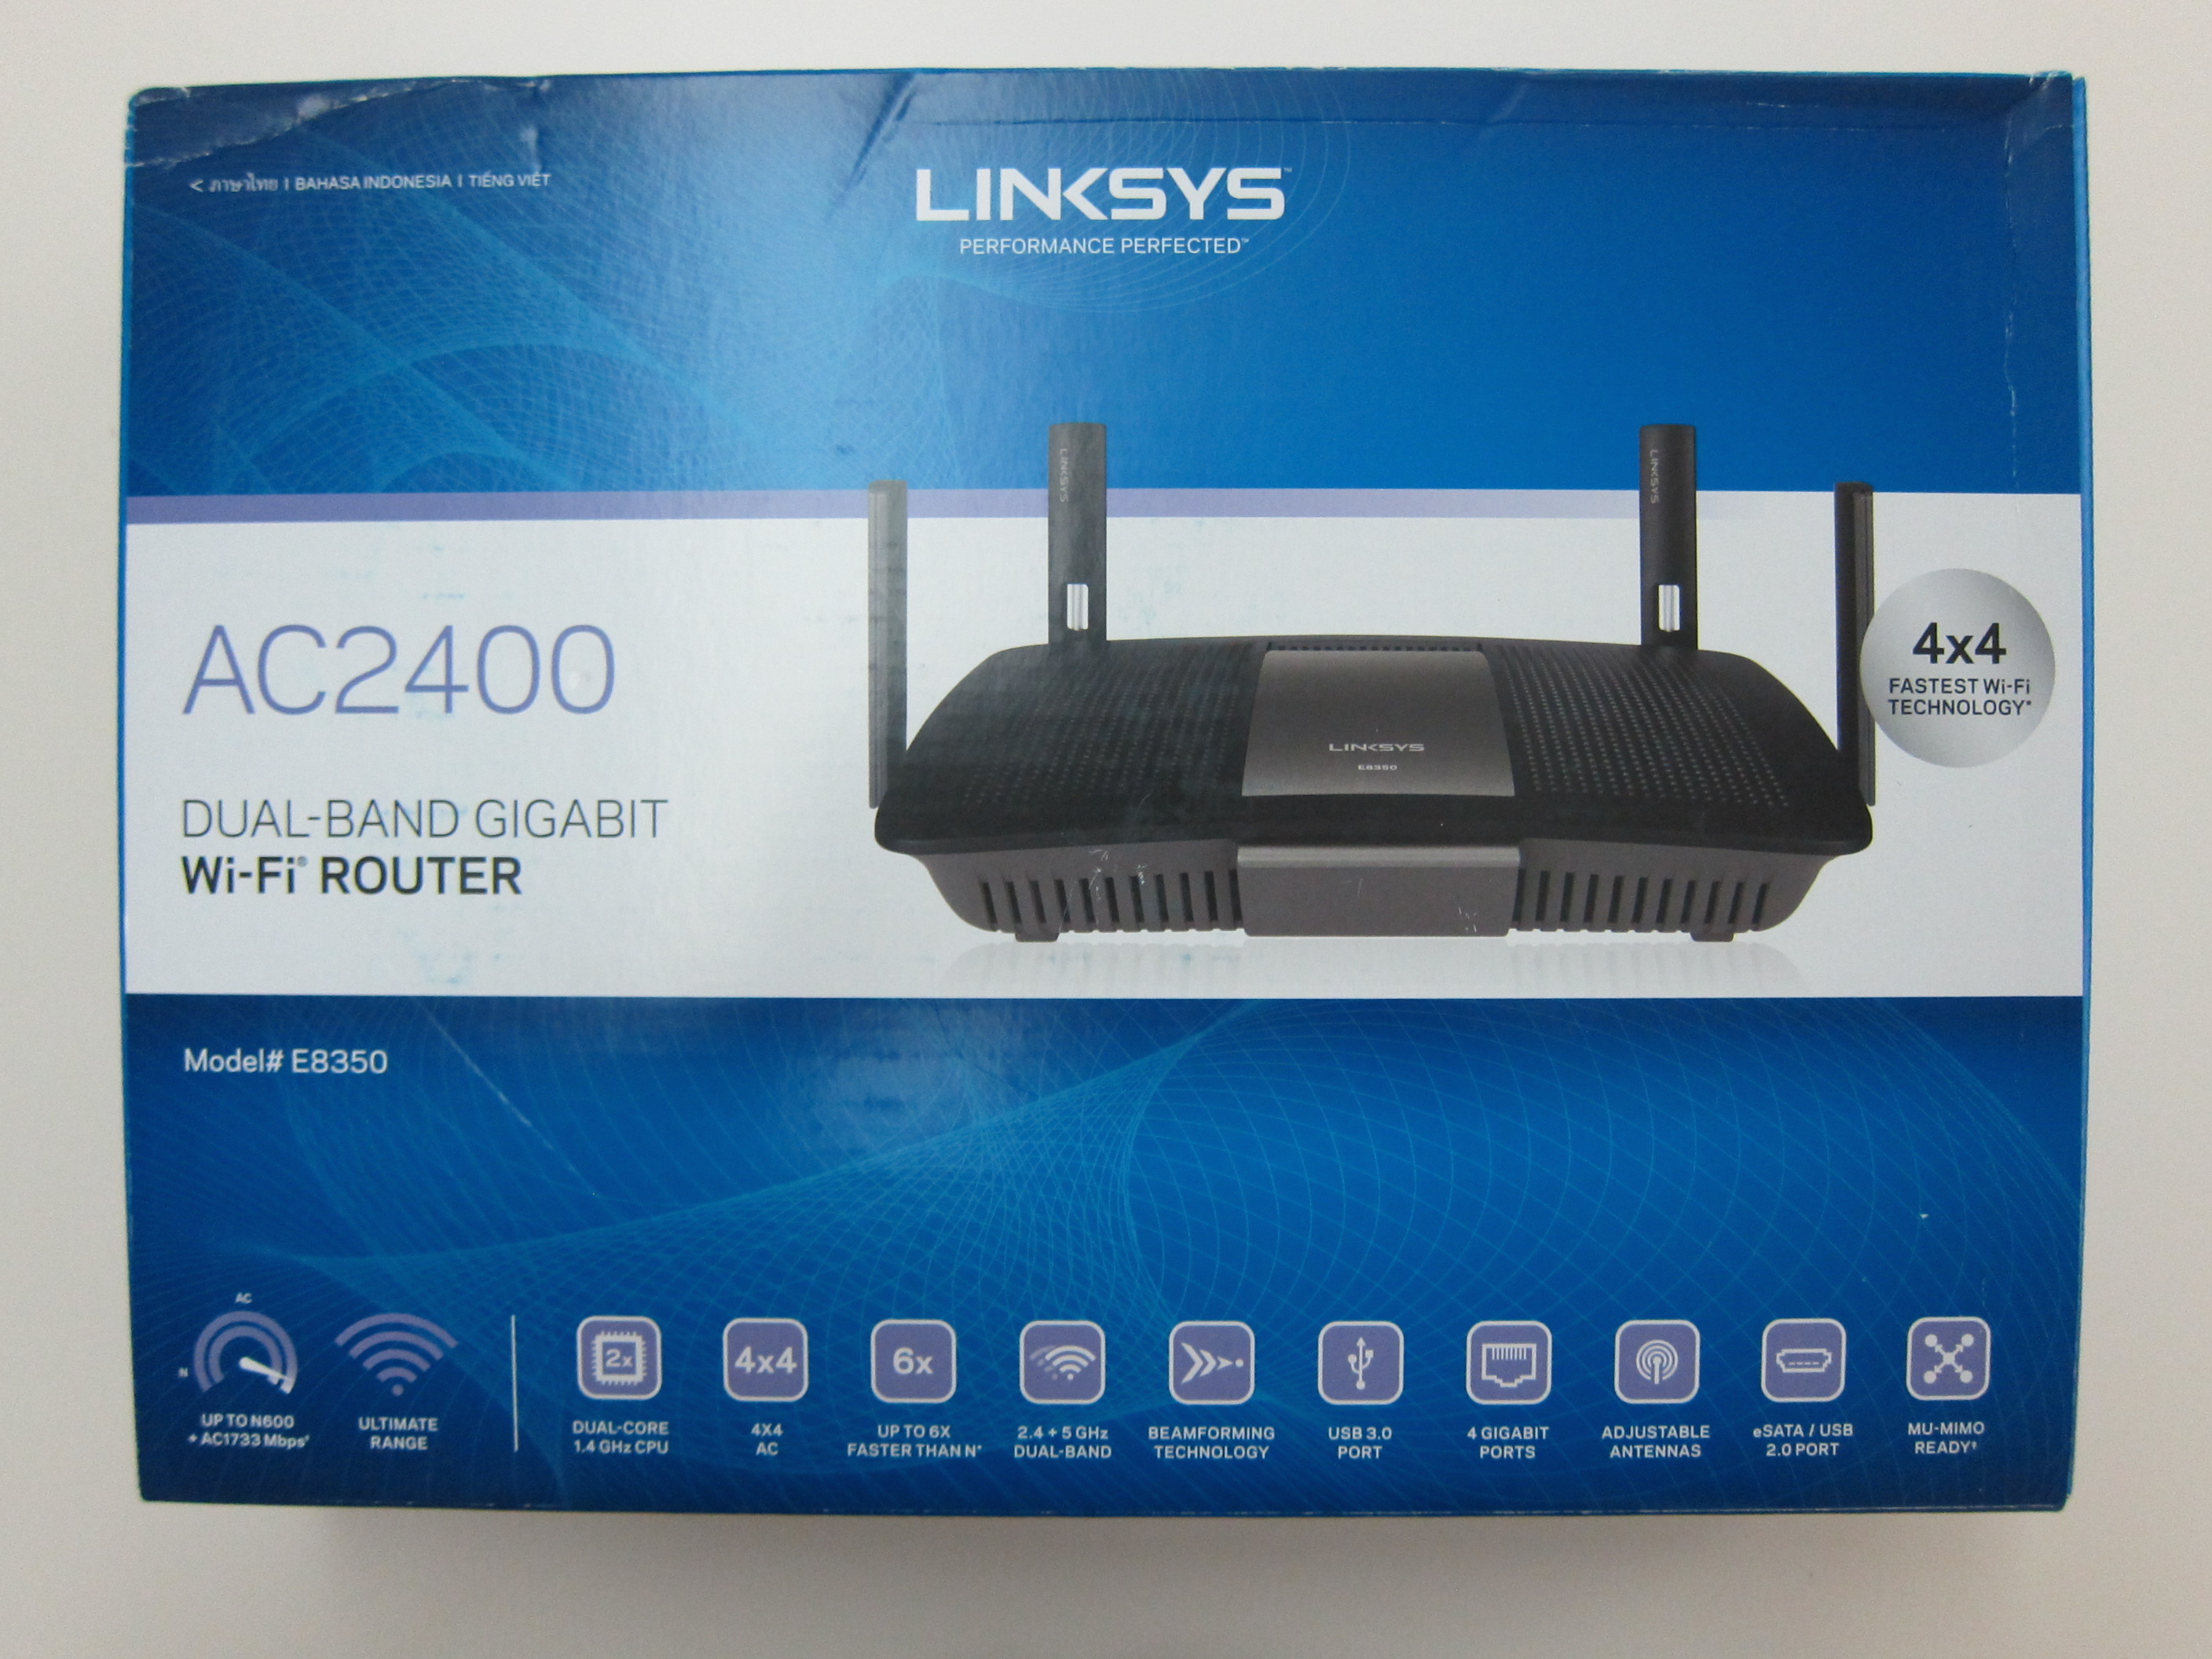 Linksys E8350 AC2400 Dual-Band Gigabit Wi-Fi Router Review « Blog 